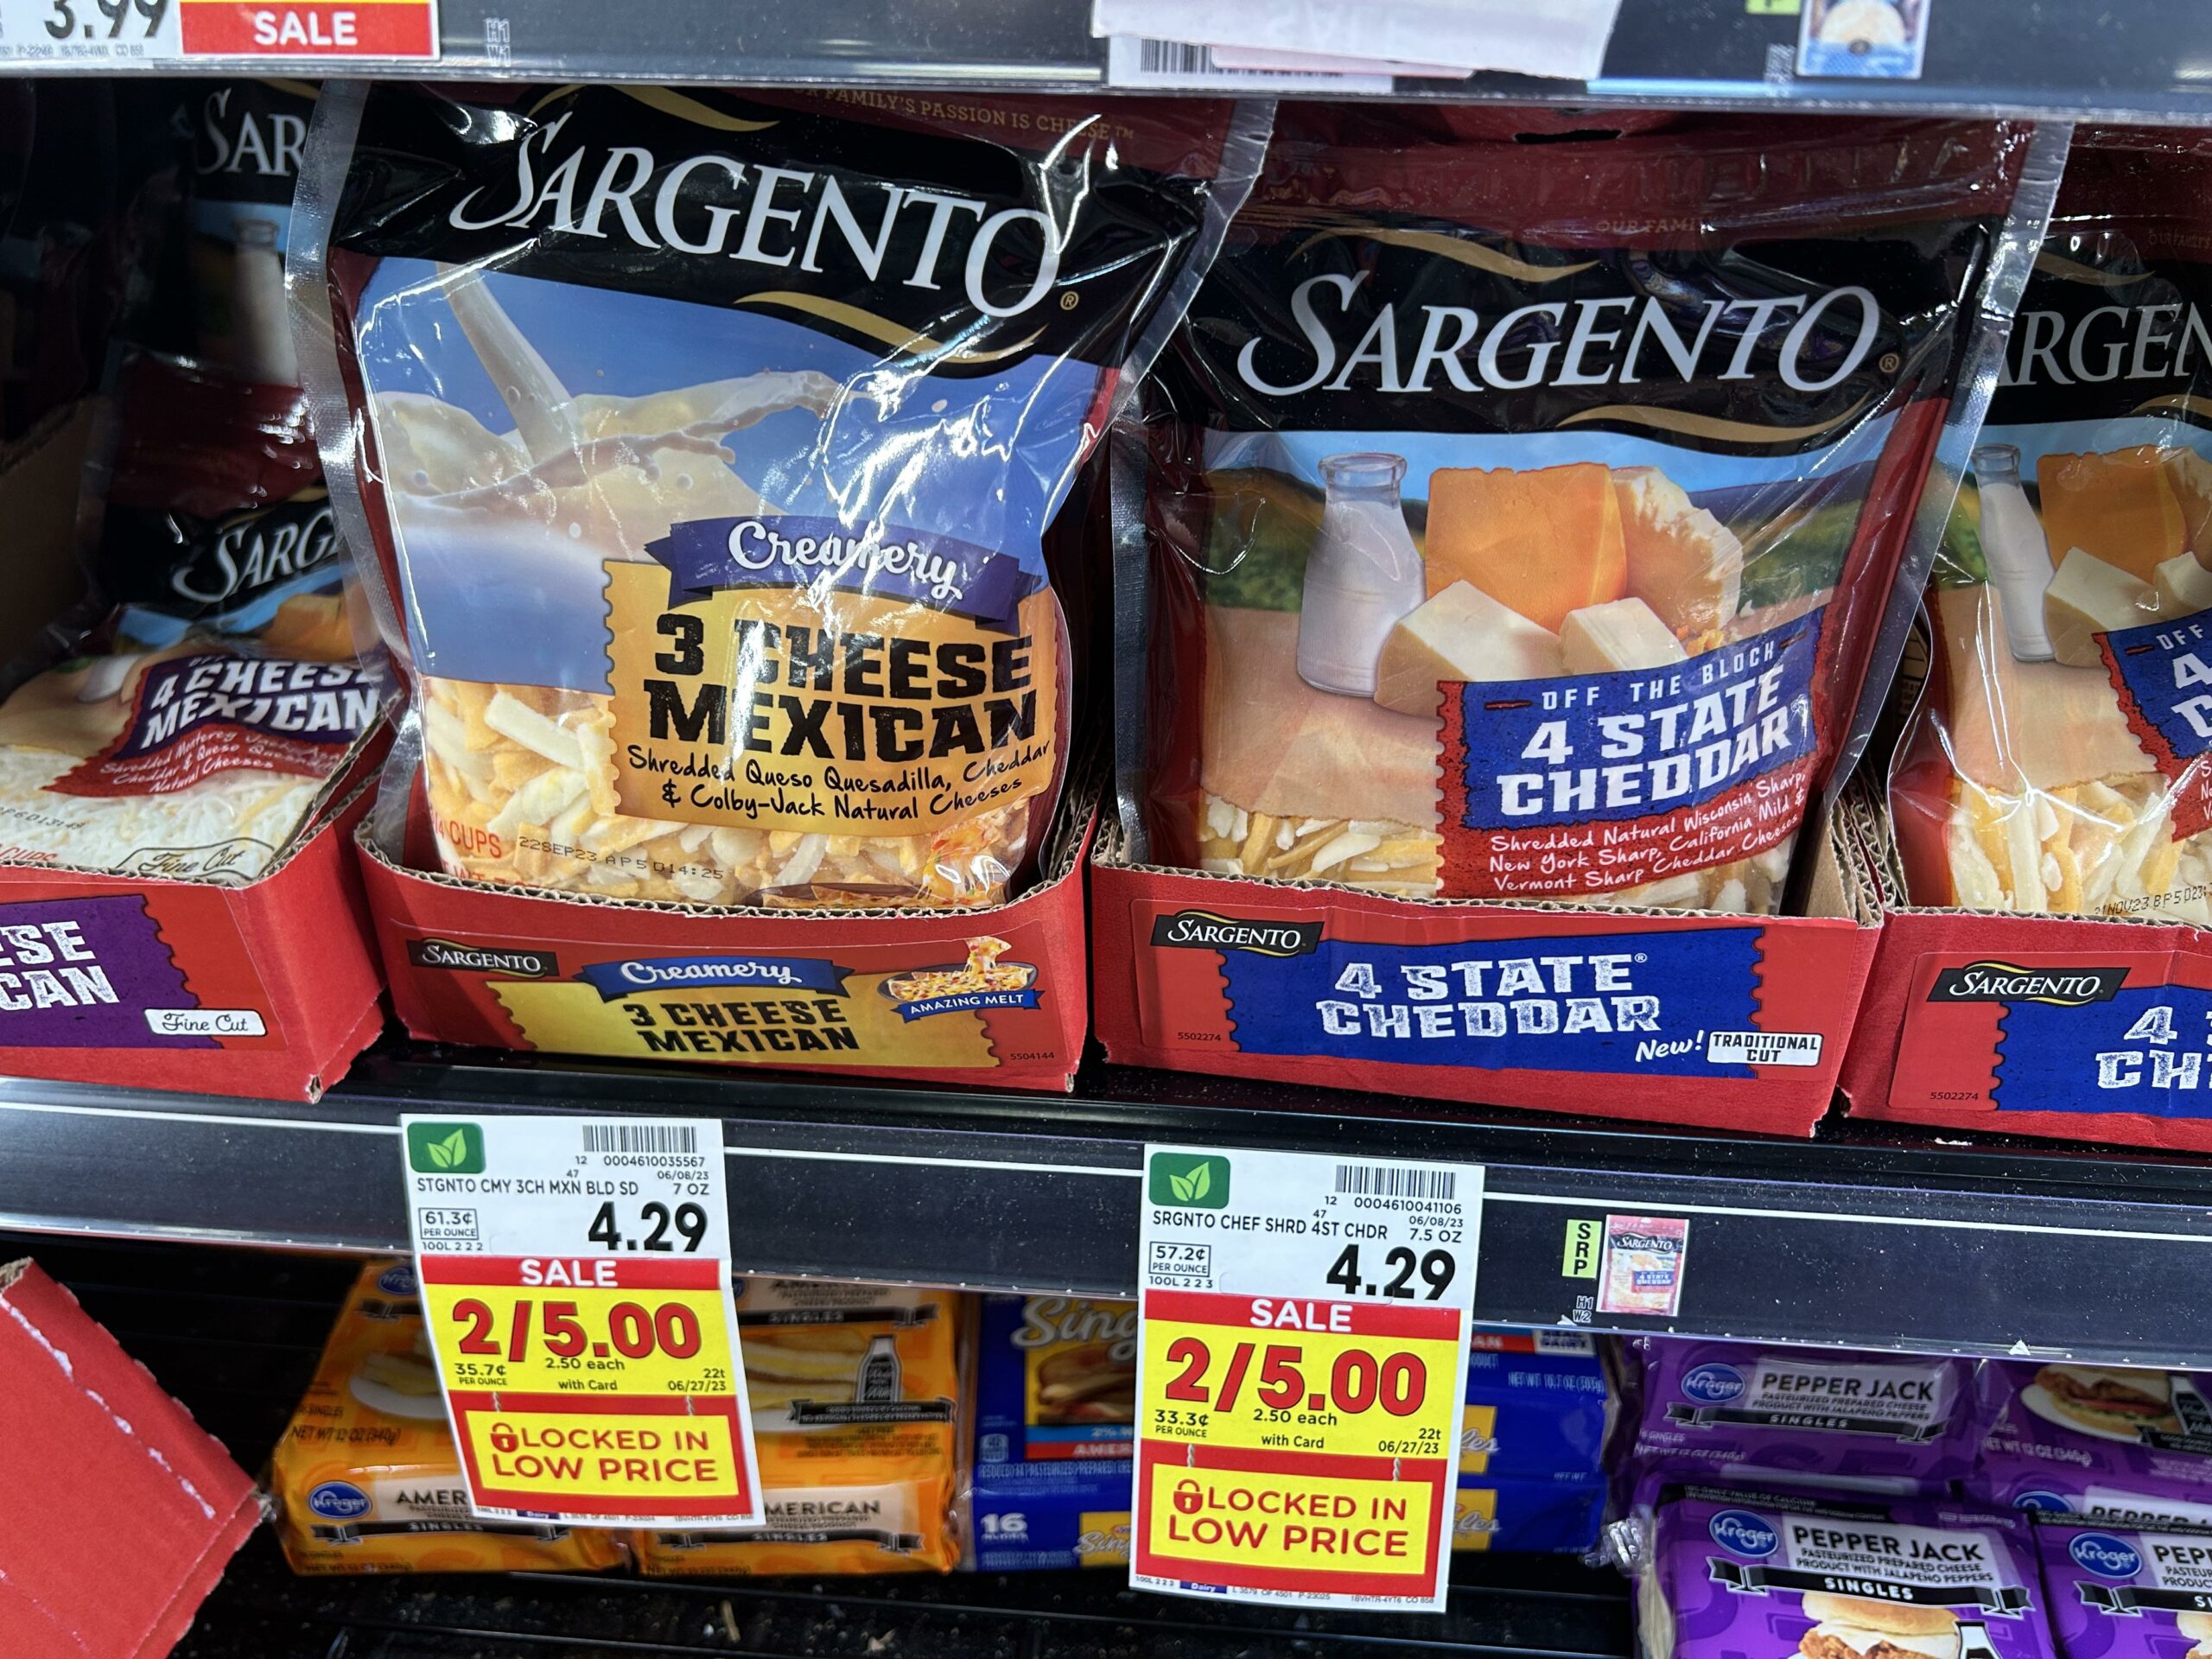 sargento cheese kroger shelf image 3